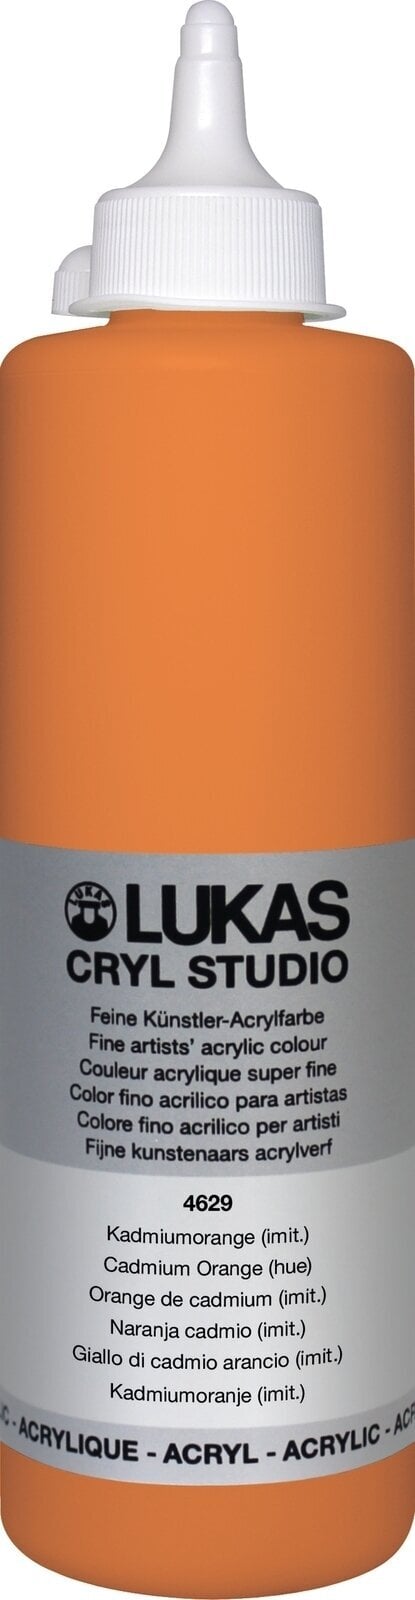 Acrylic Paint Lukas Cryl Studio Acrylic Paint 500 ml Cadmium Orange Hue